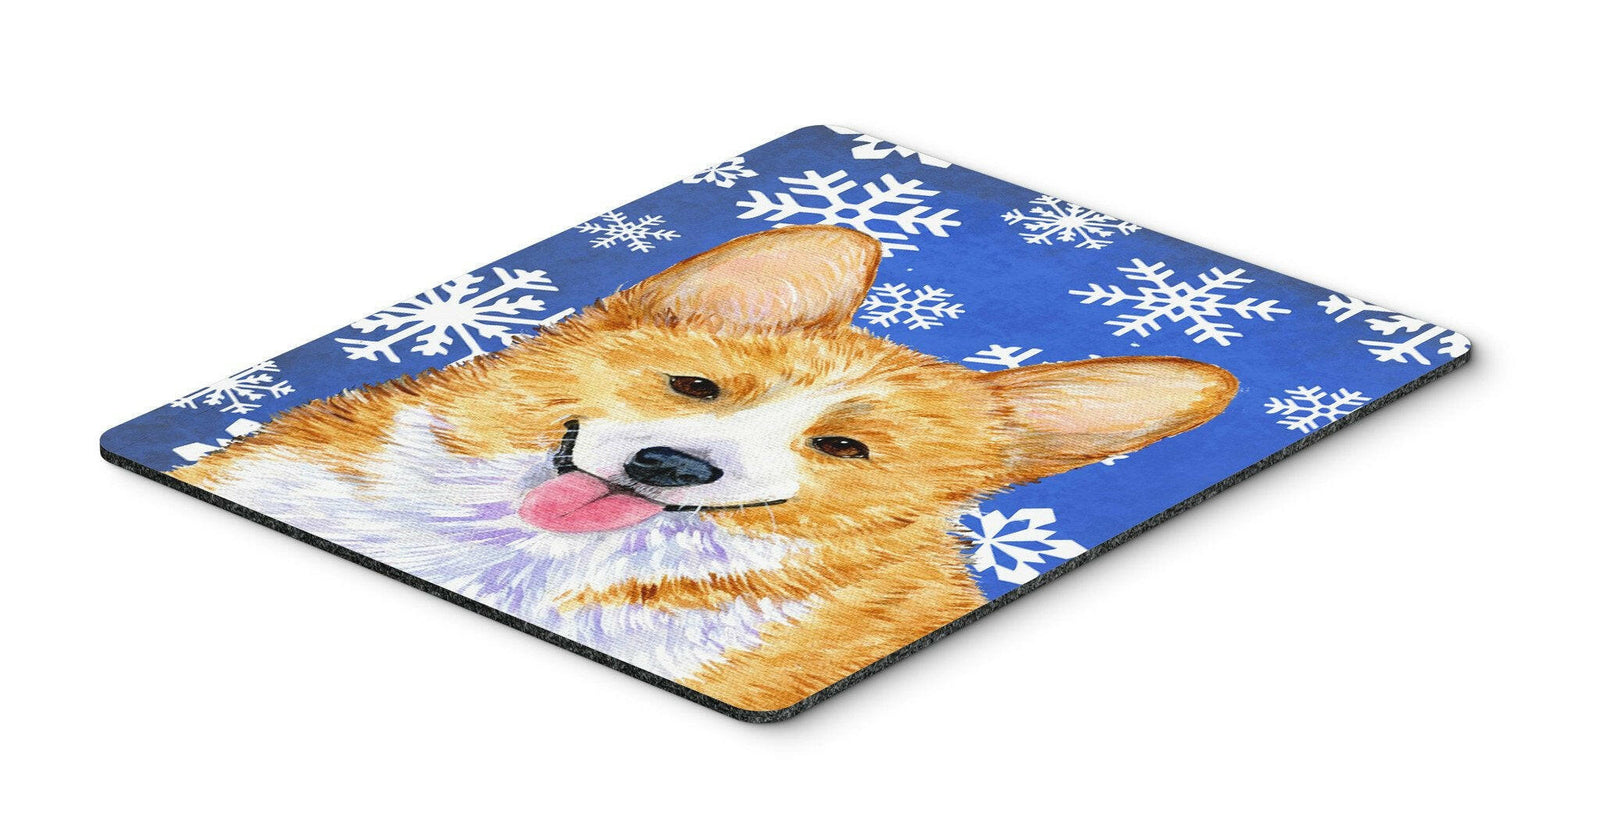 Corgi Winter Snowflakes Holiday Mouse Pad, Hot Pad or Trivet by Caroline's Treasures